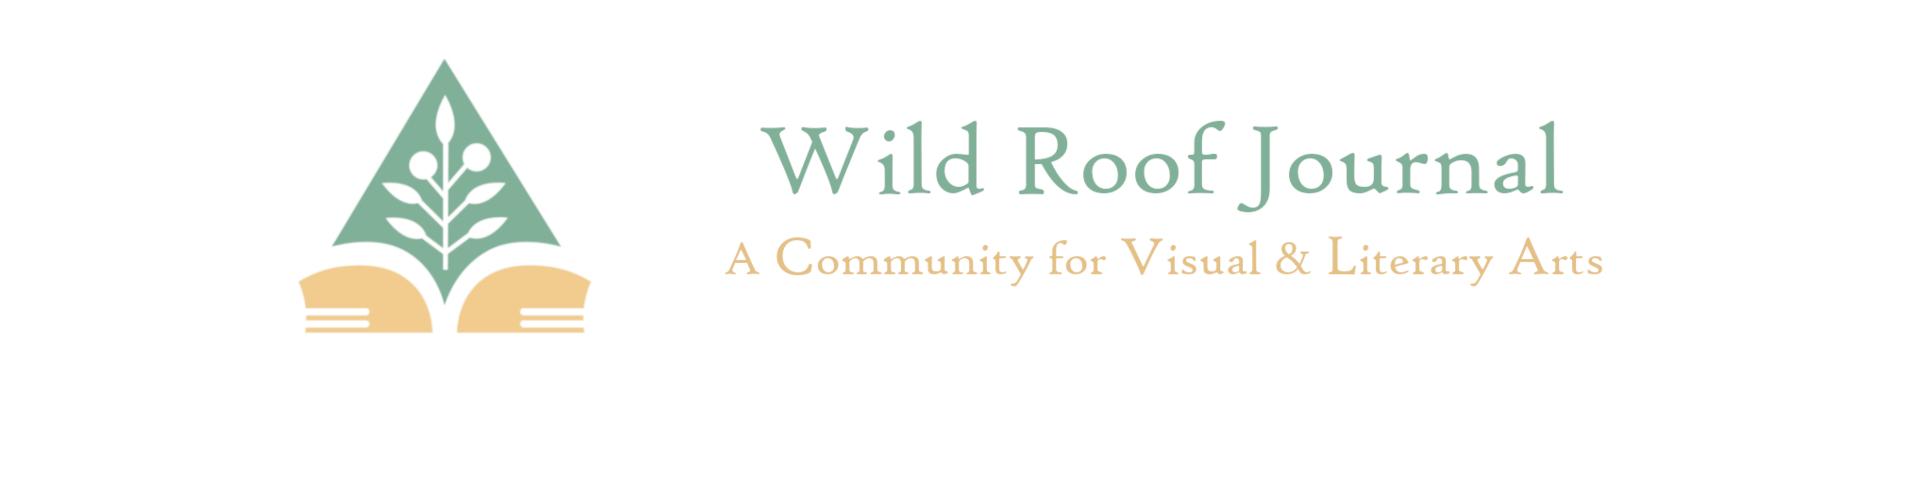 Wild Roof Podcast